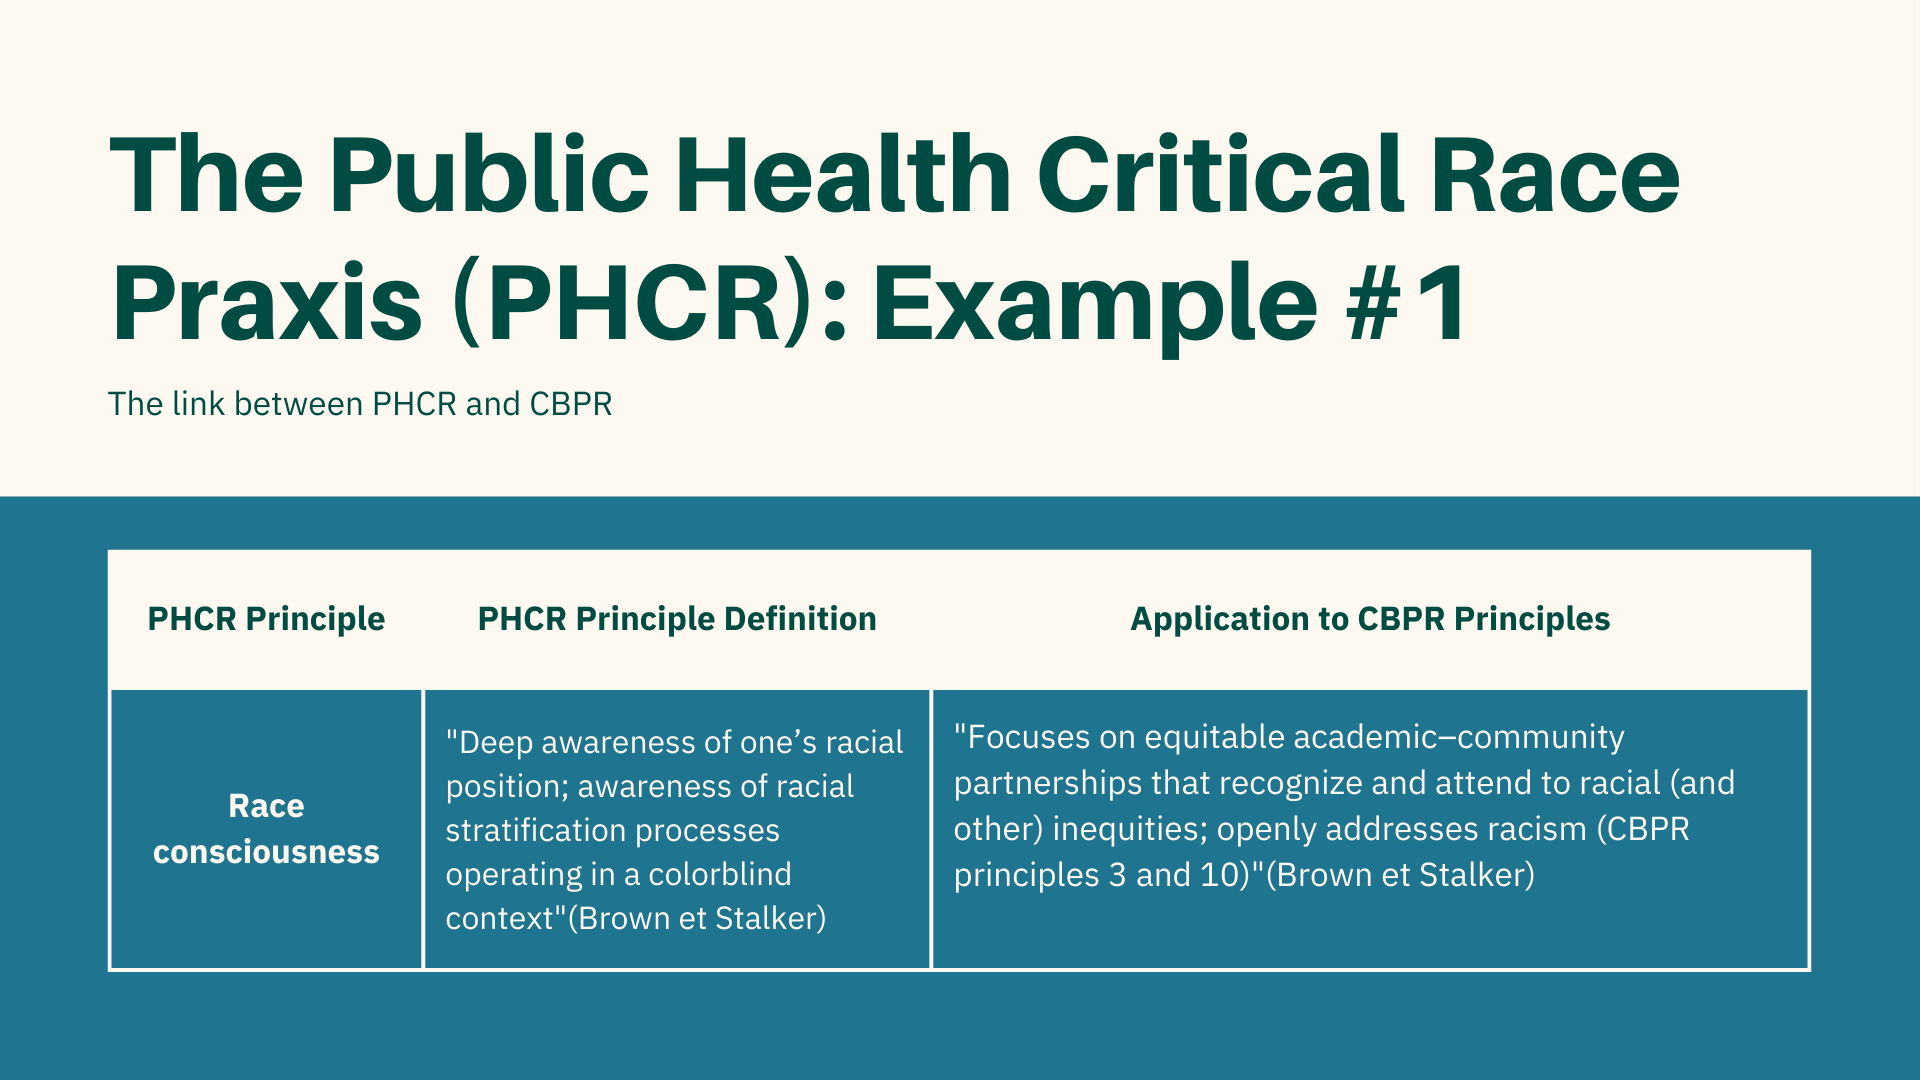 An example of the public health critical race praxis (PHCR)